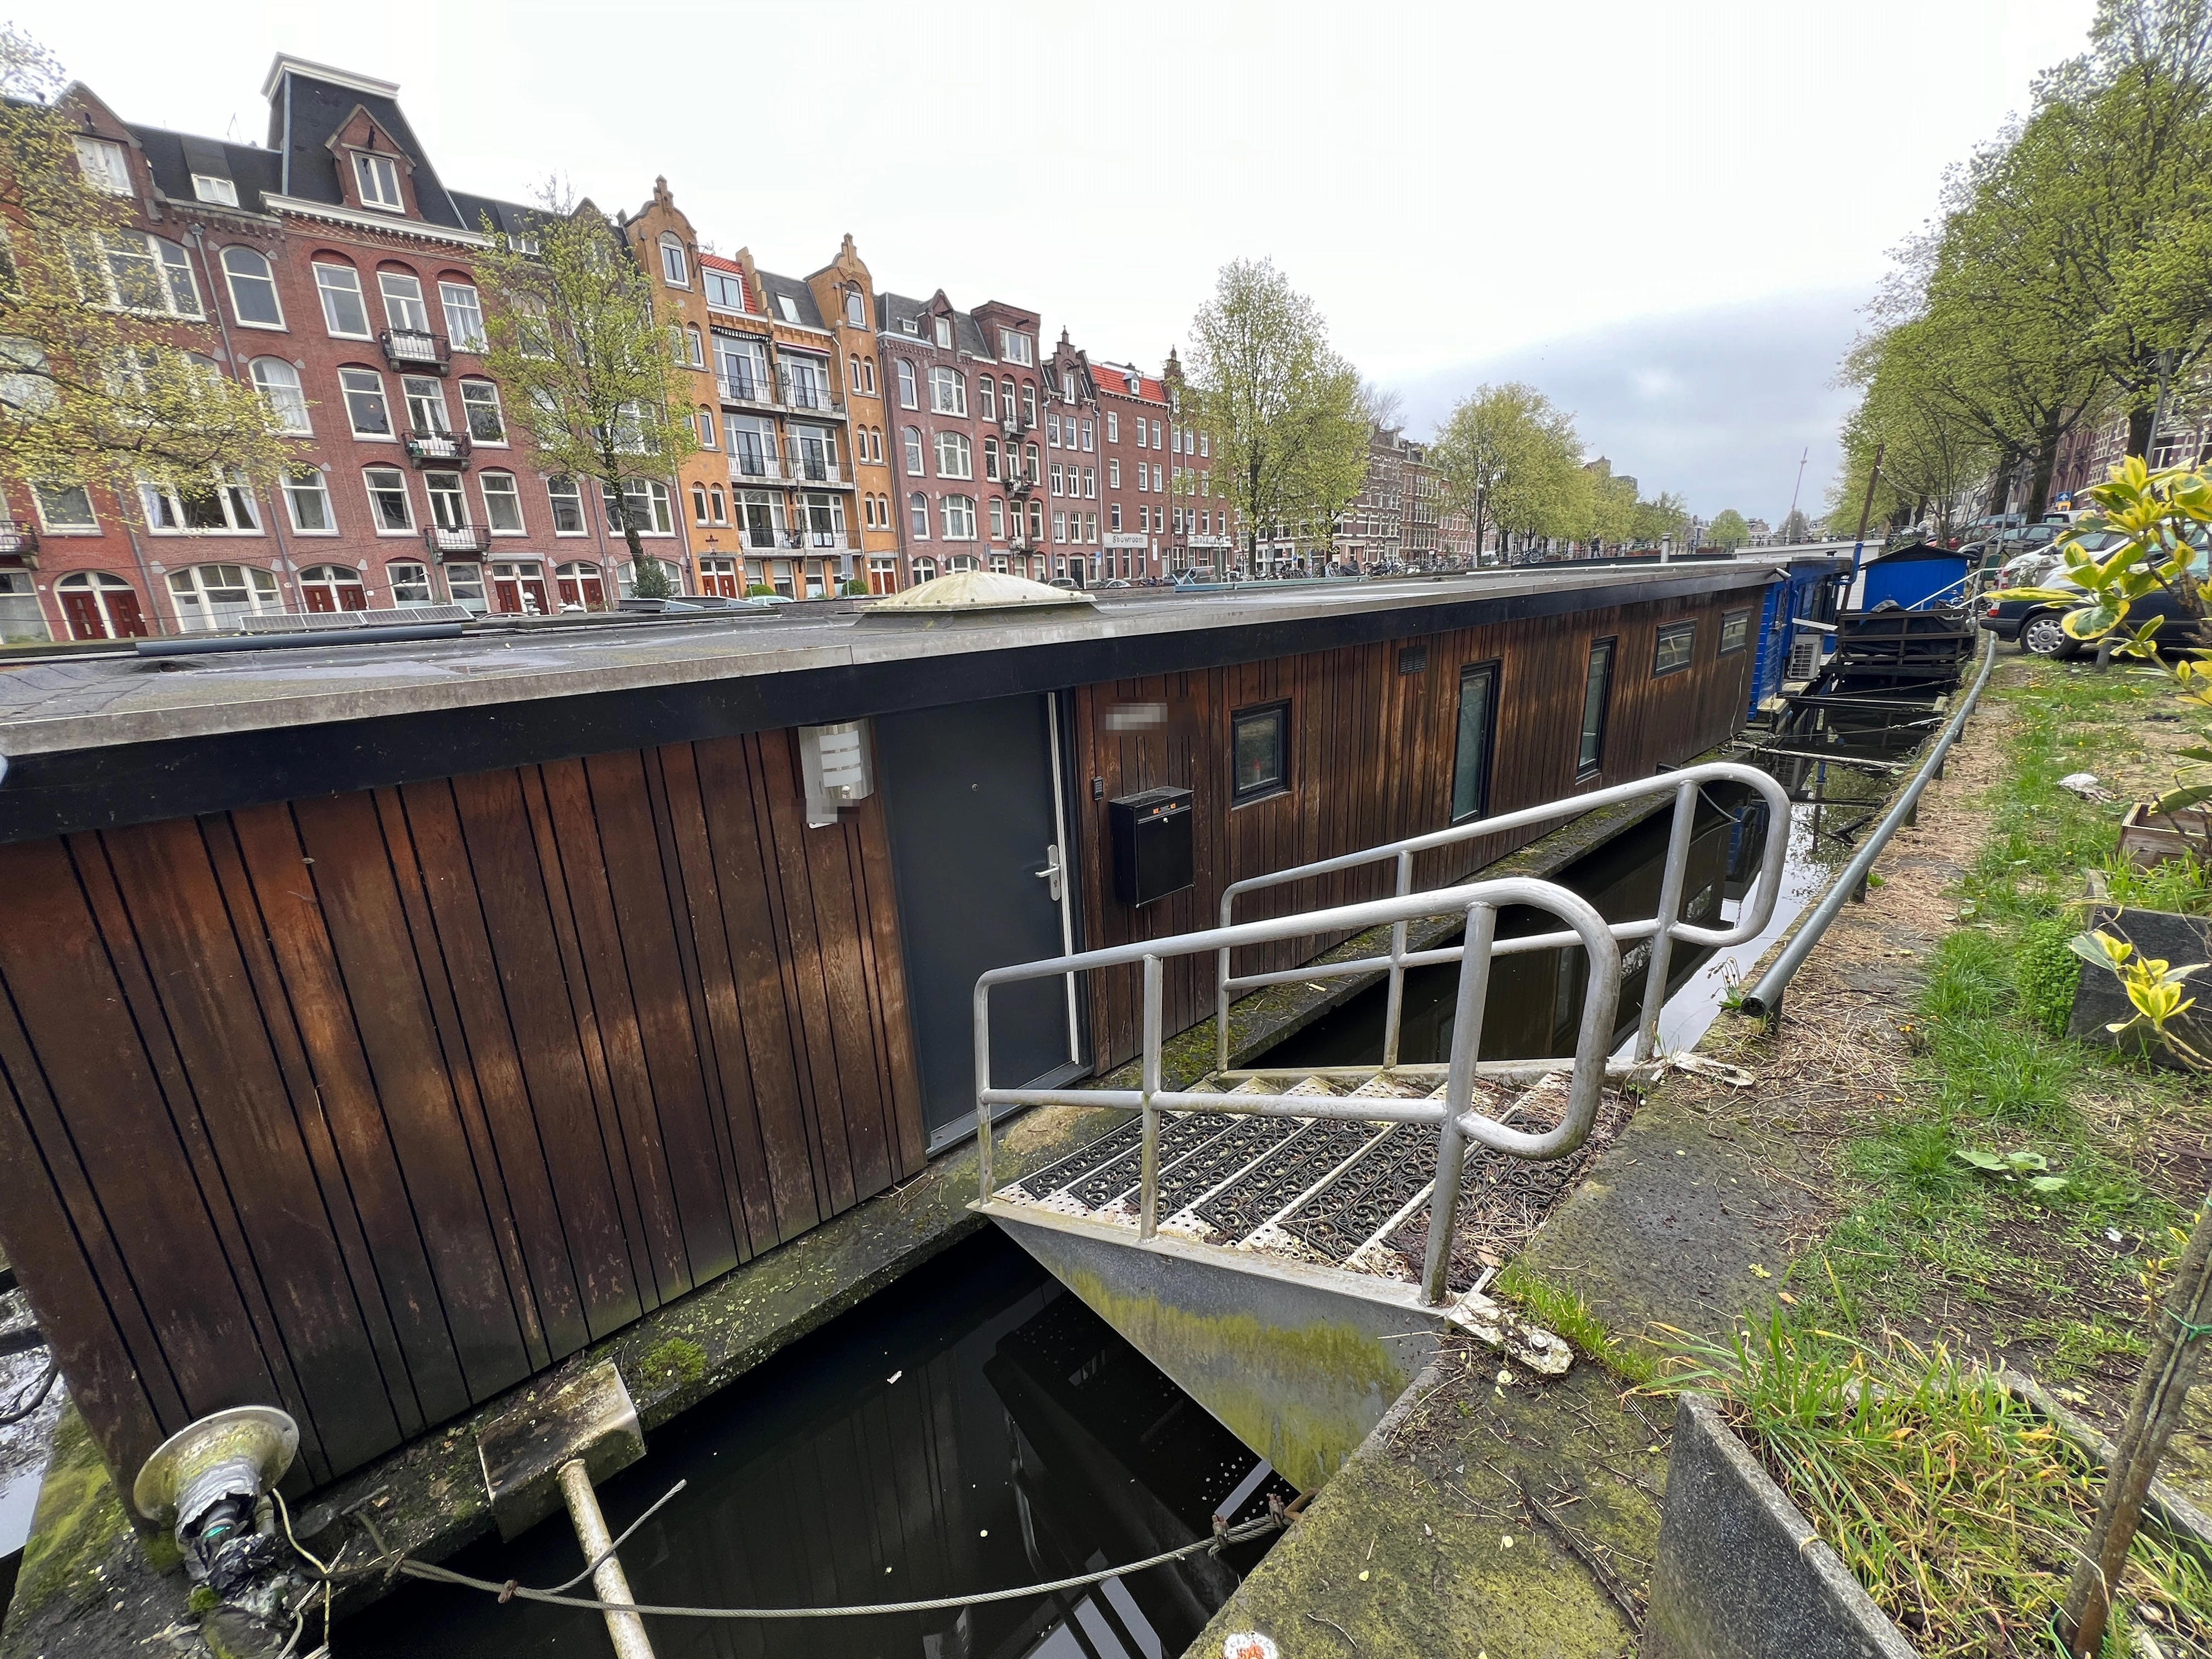 boat trip amsterdam price